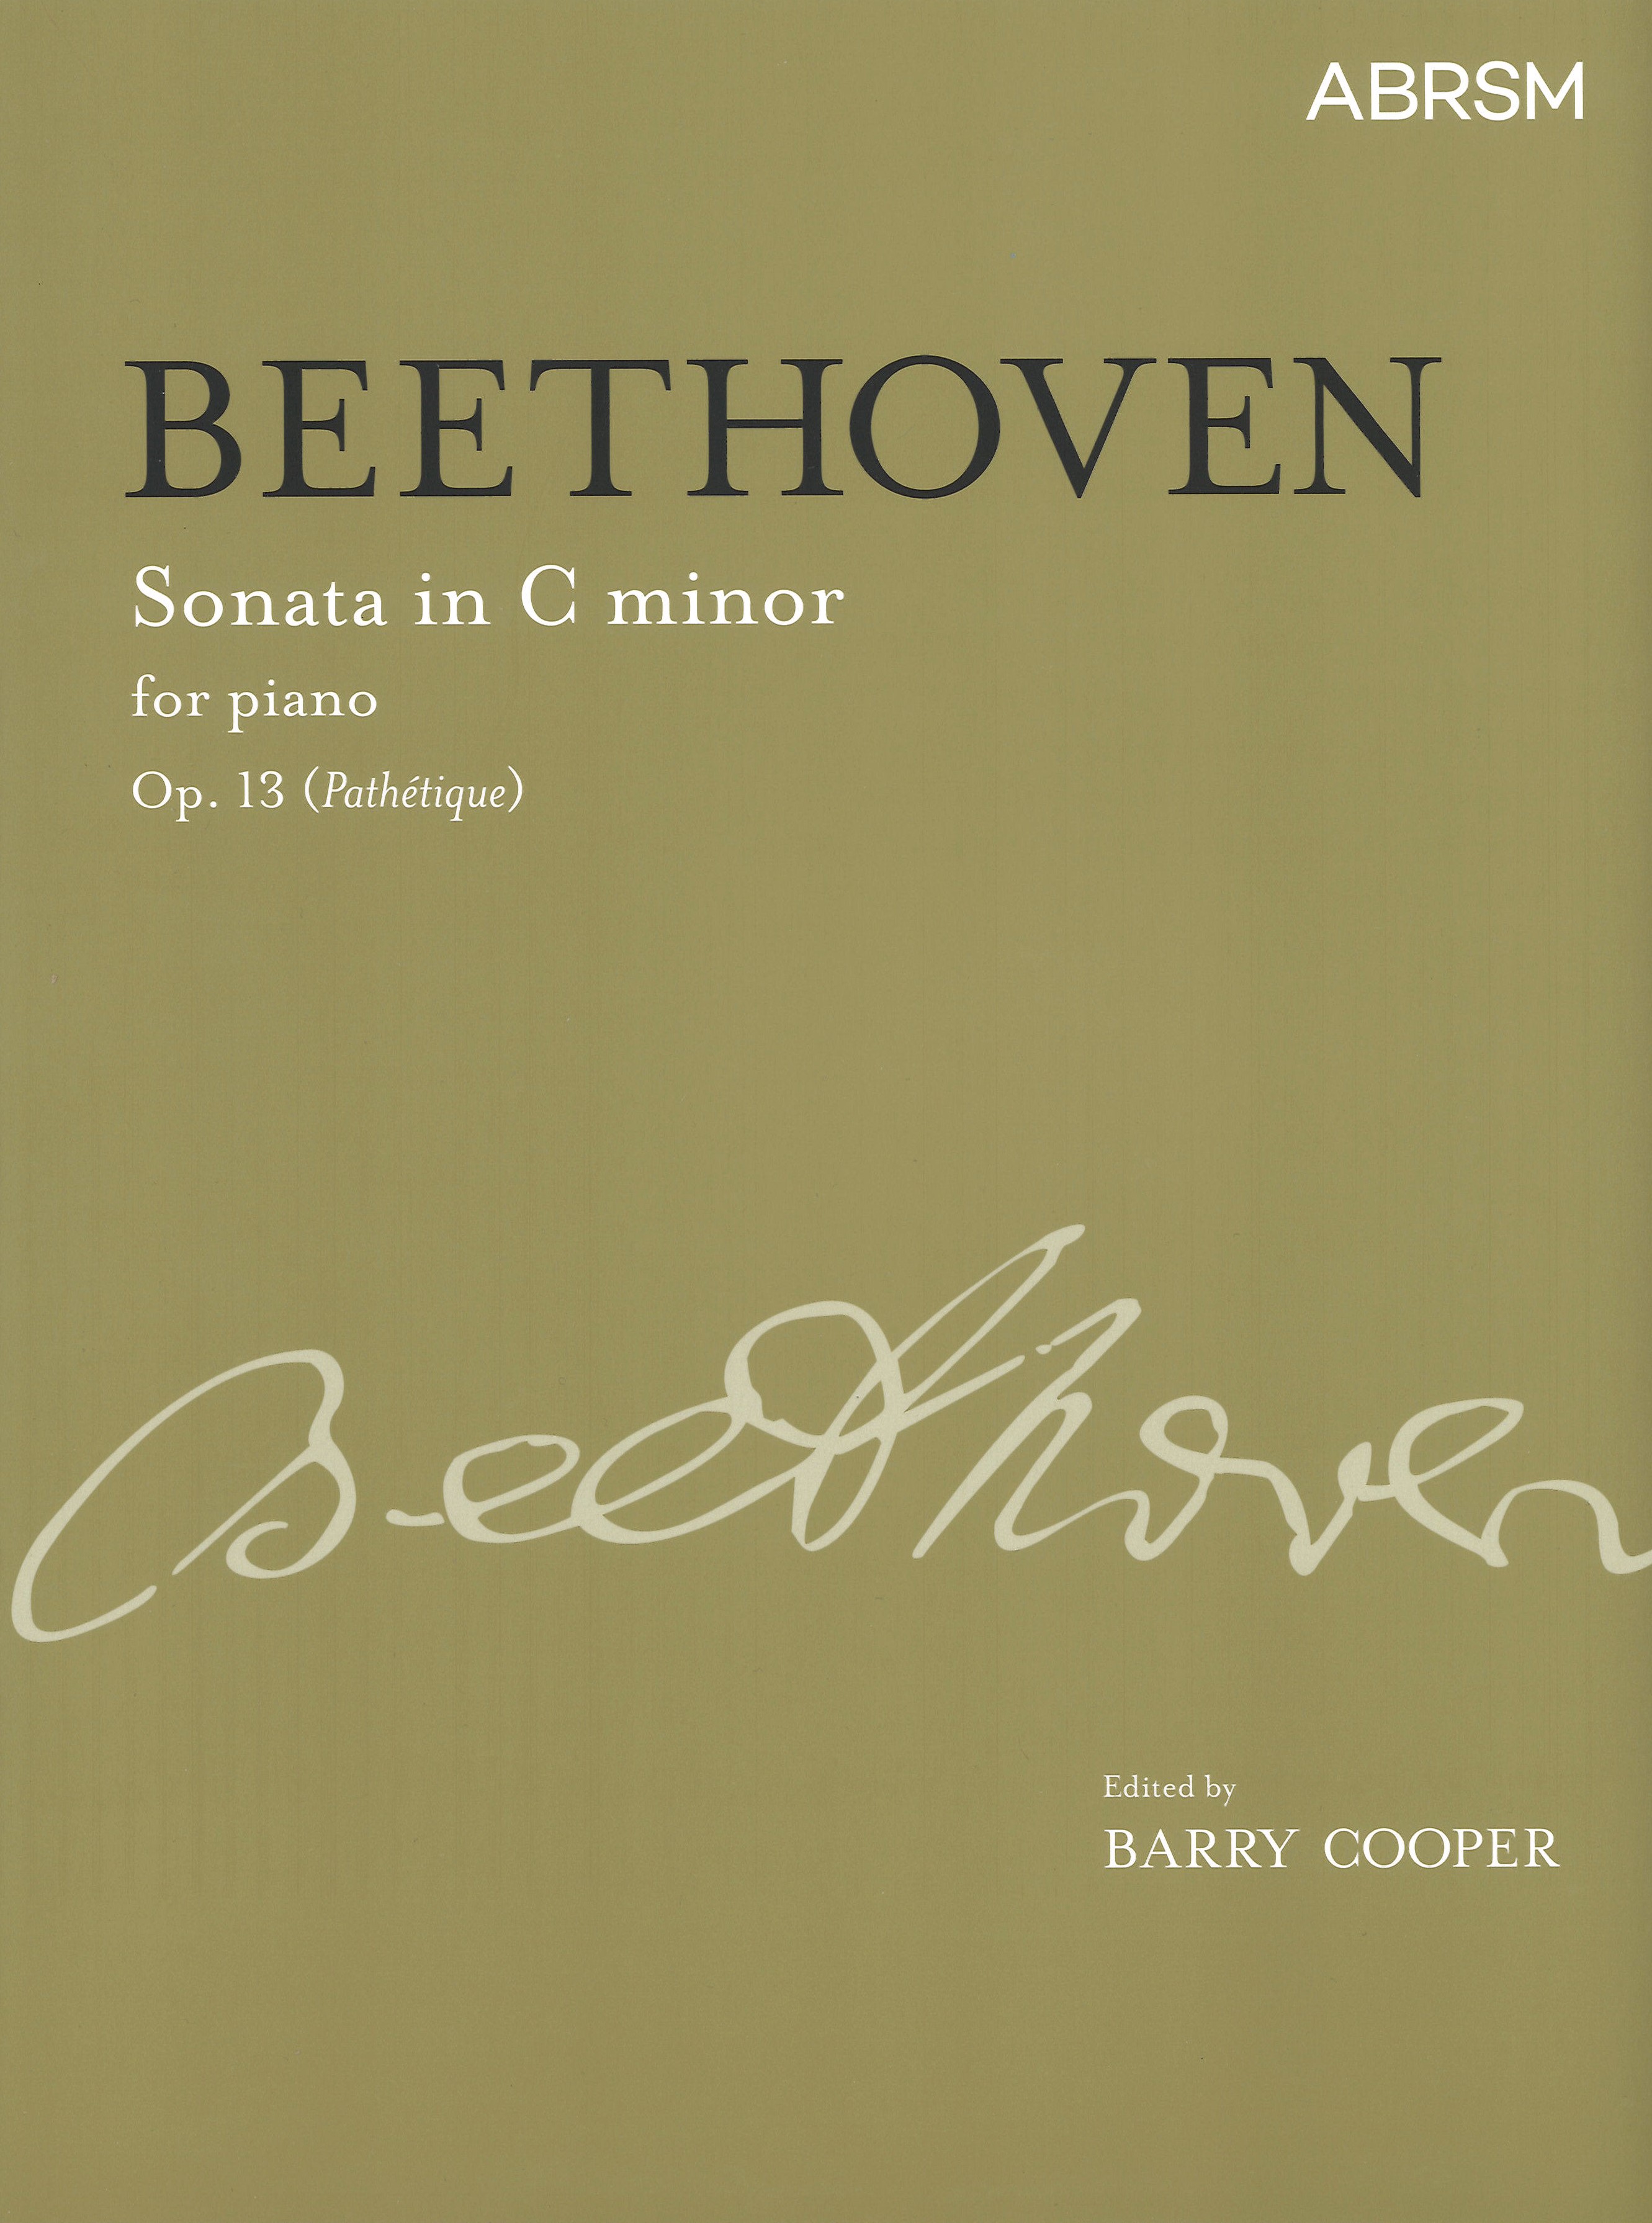 Beethoven Sonata Op13 Cmin (pathetique) Cooper Sheet Music Songbook